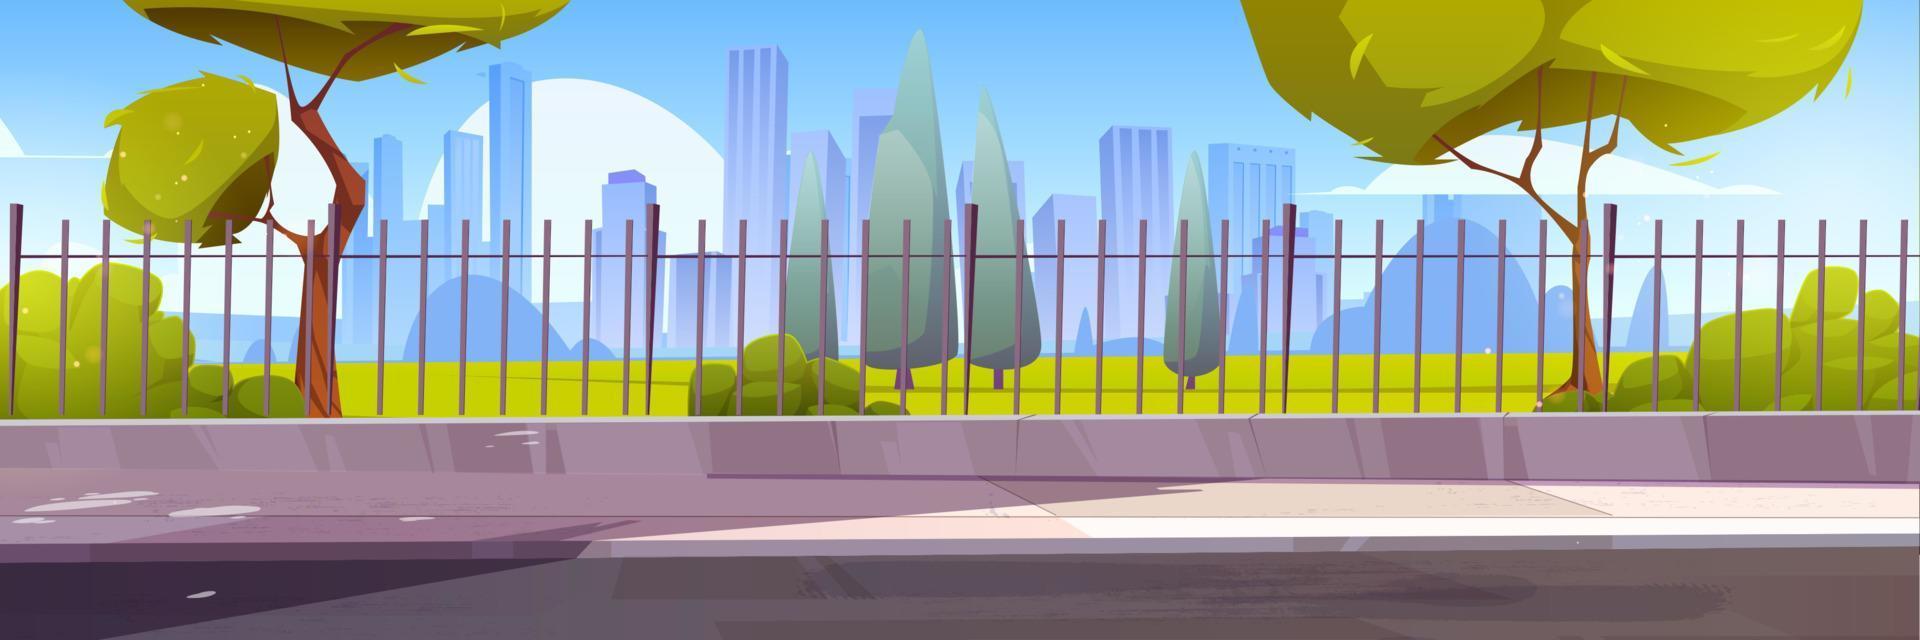 Summer city skyline, urban view, fence background vector